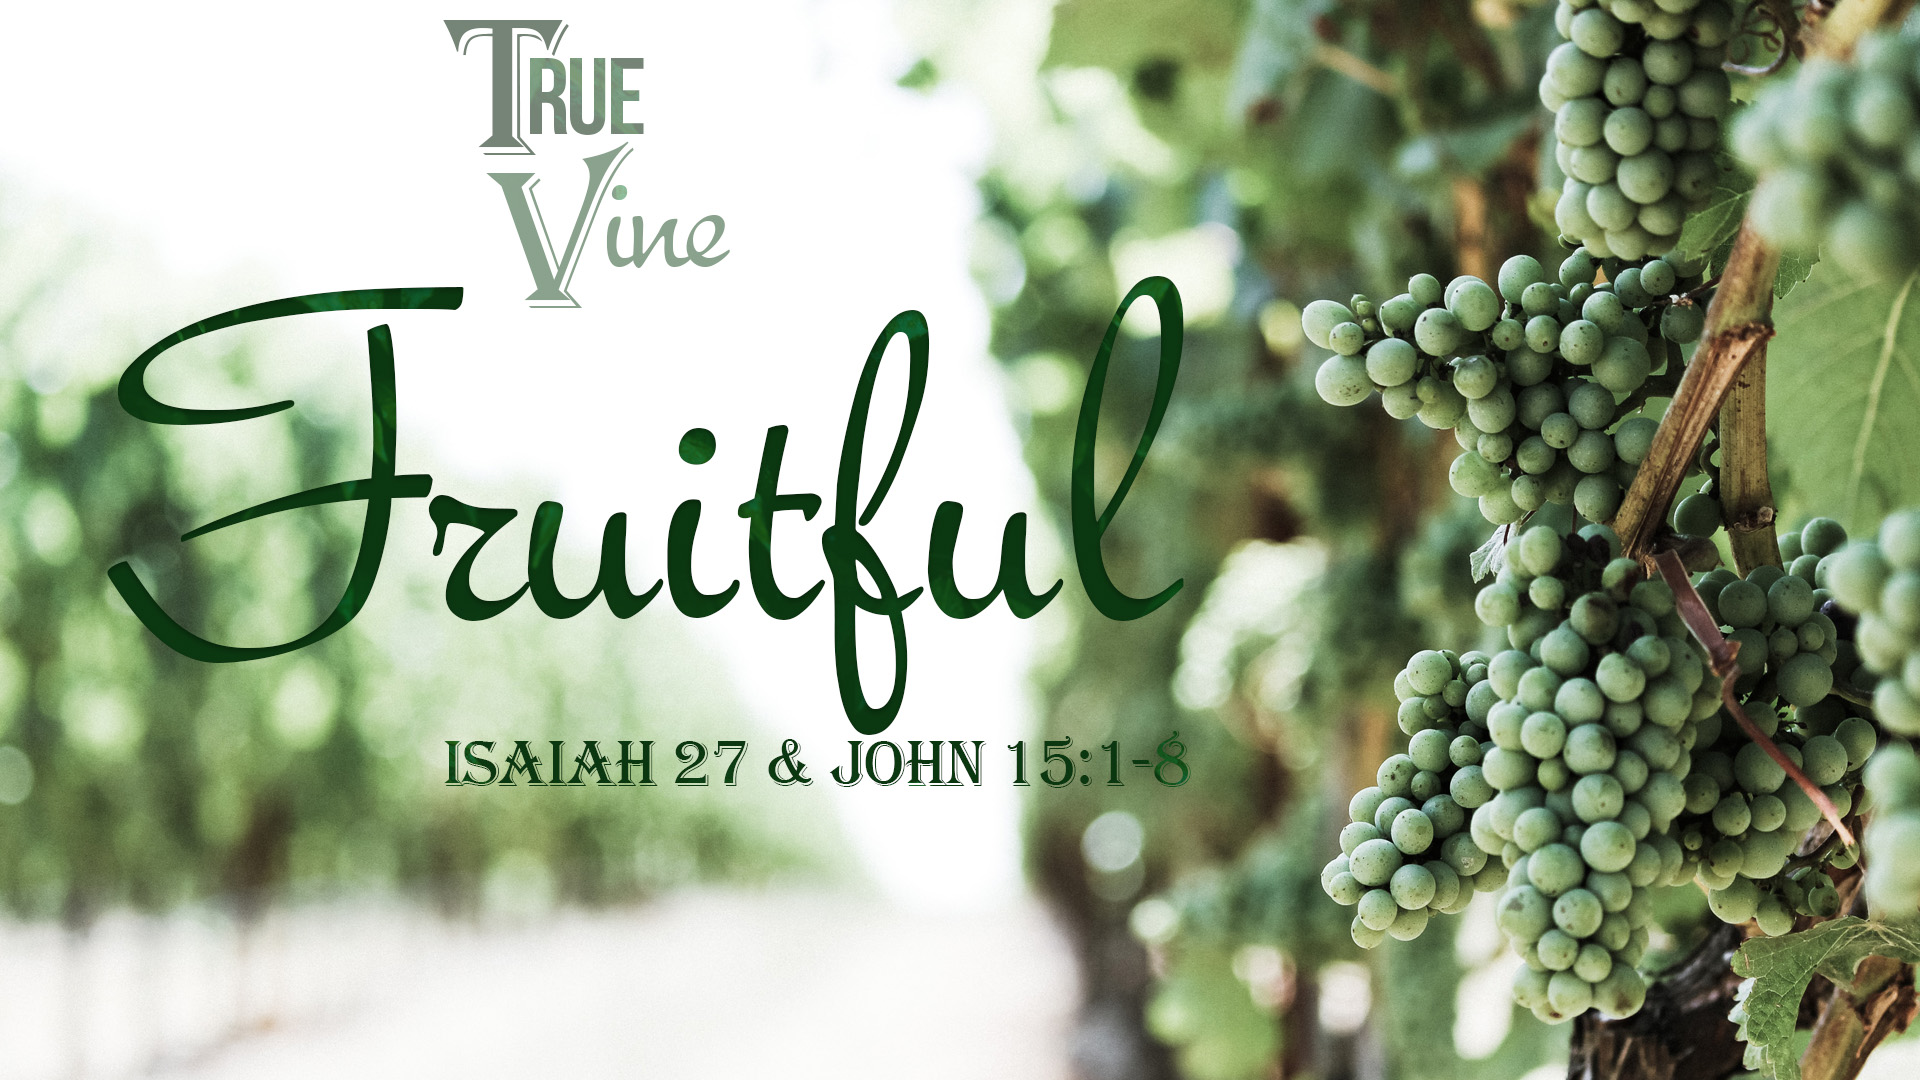 True Vine, part 1: Fruitful 